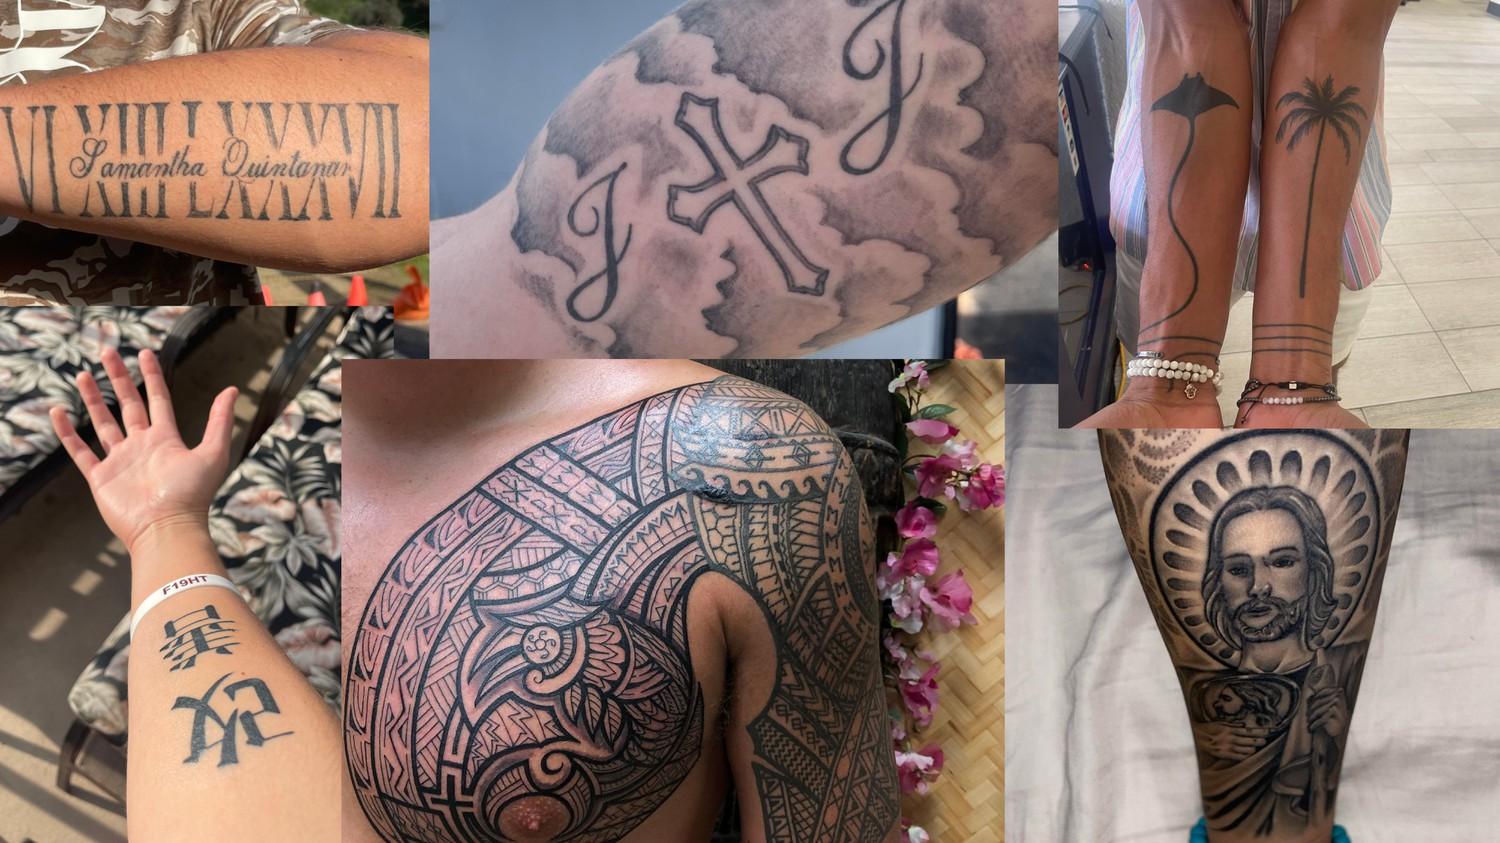 20+ of the best tattoos on the arm for men - ❤️ Онлайн блог о тату  IdeasTattoo